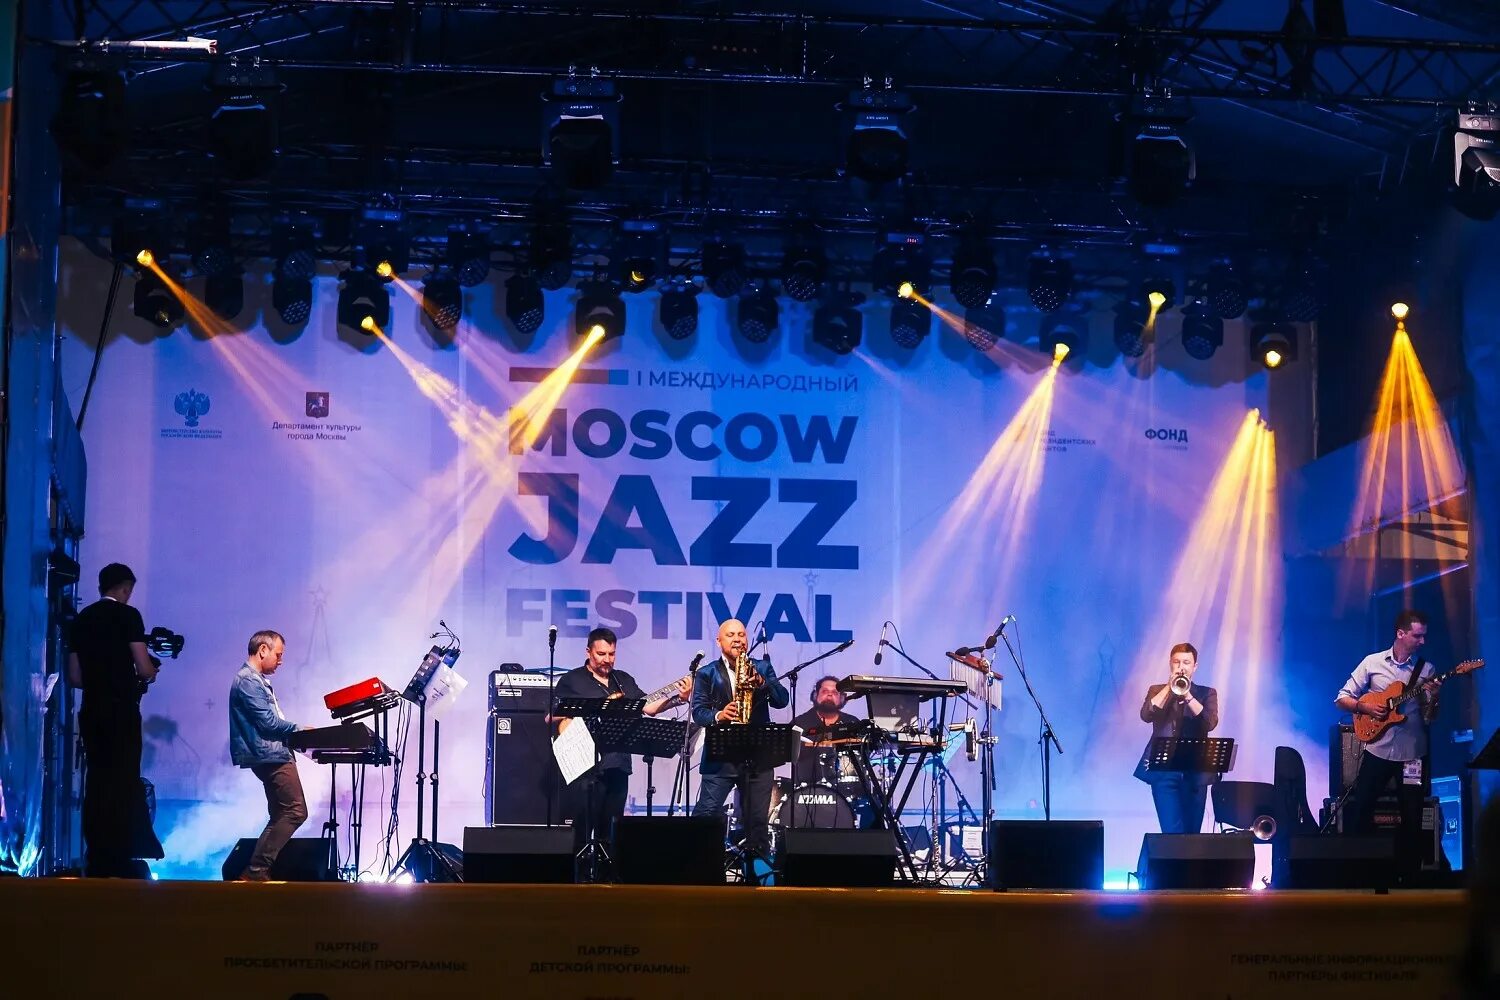 Moscow jazz festival